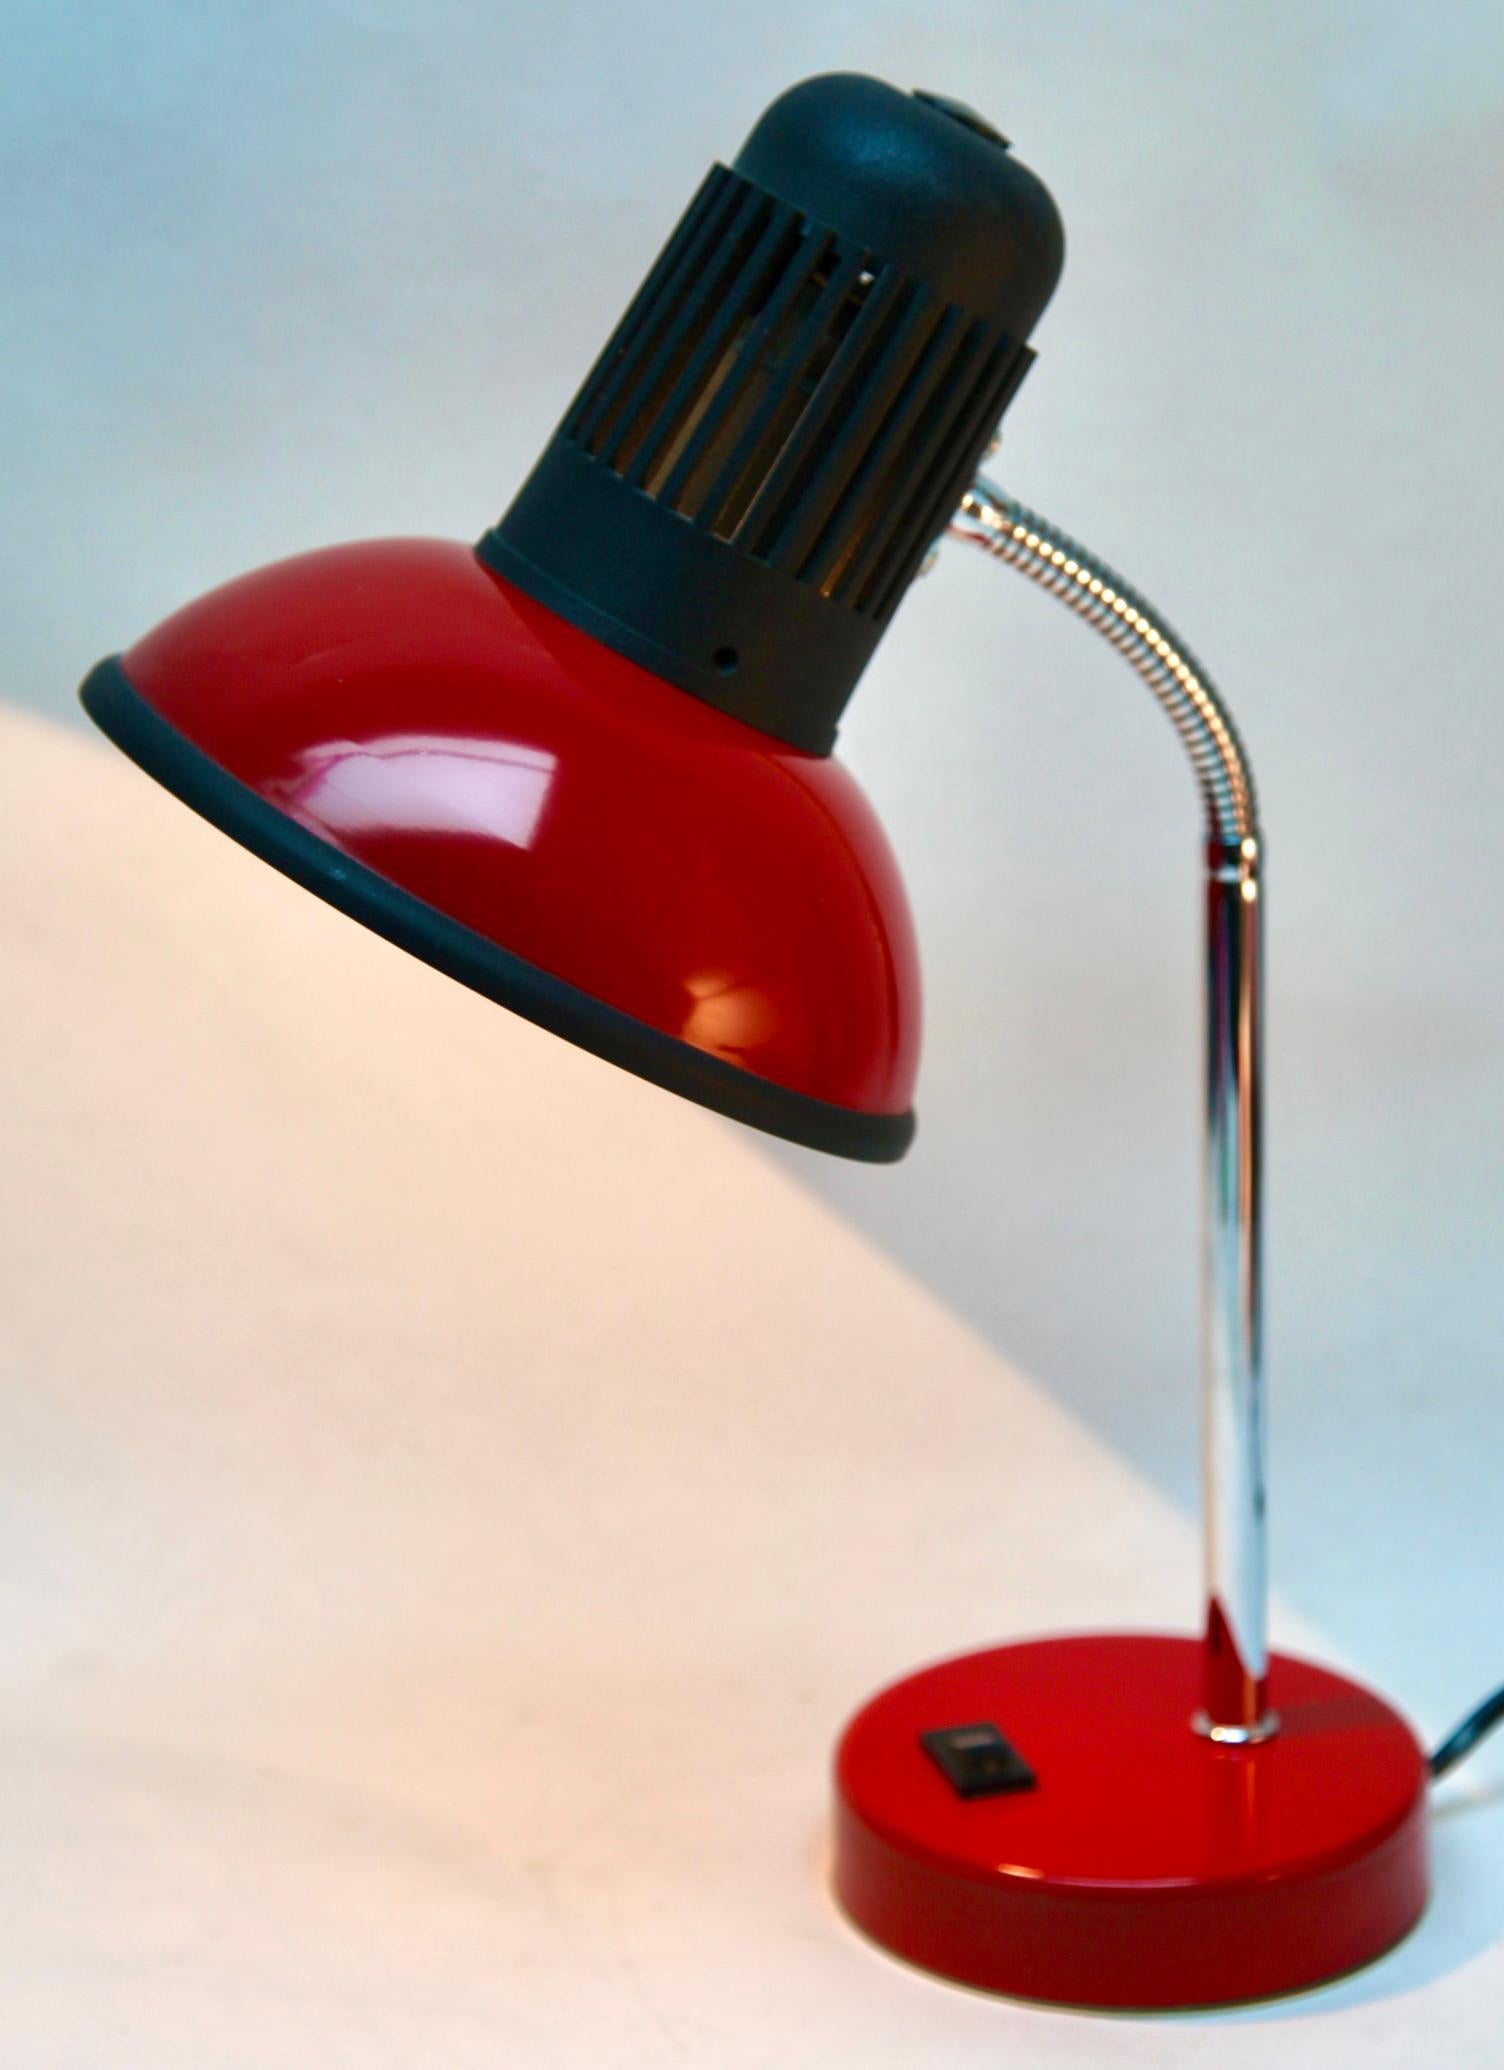 Metal Vintage Red Adjustable Desk/Side Table Lamp by Massive Whit Label, 1970s For Sale